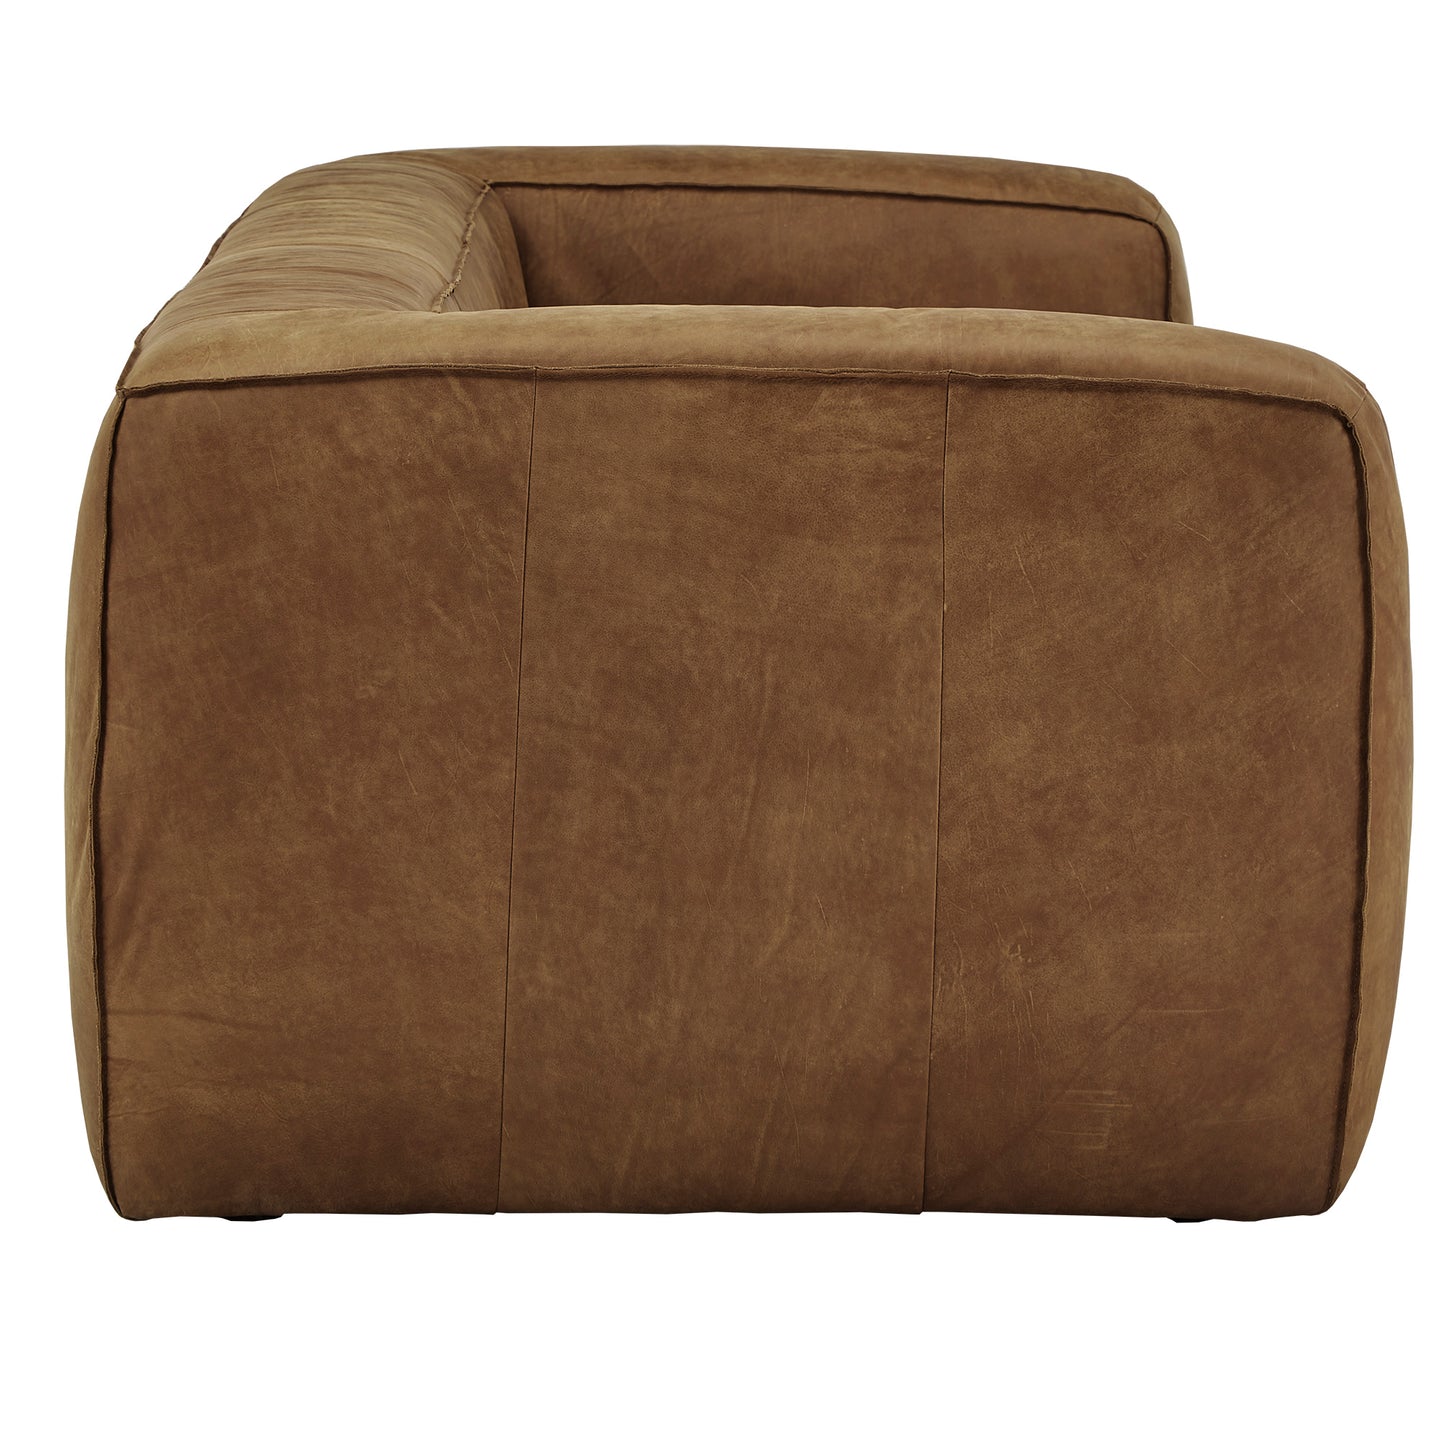 Dark Mahogany Outback Oxford Leather Sofa - Tan